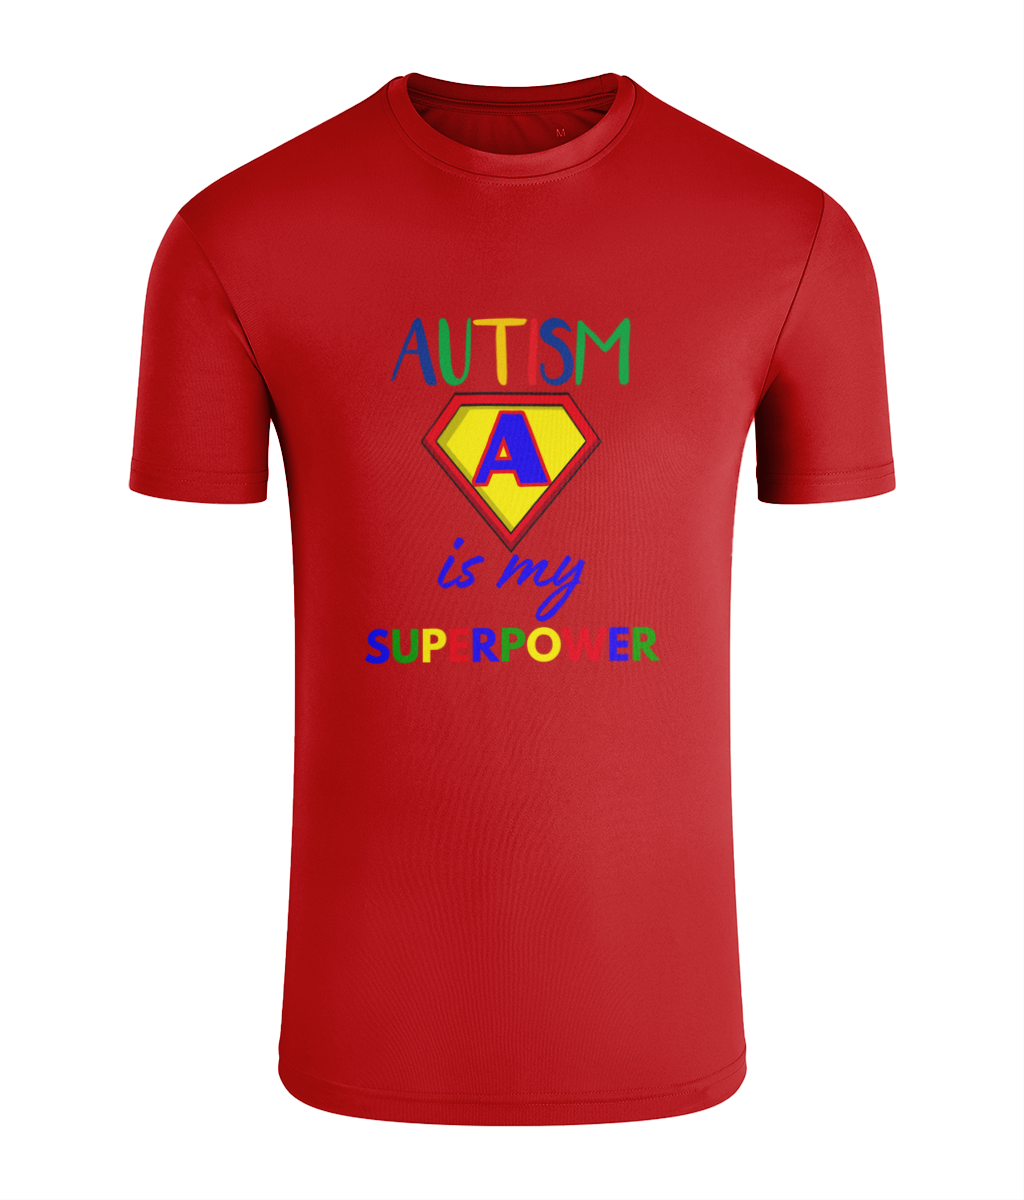 Autism is my superpower kids children's t-shirt summer clothing